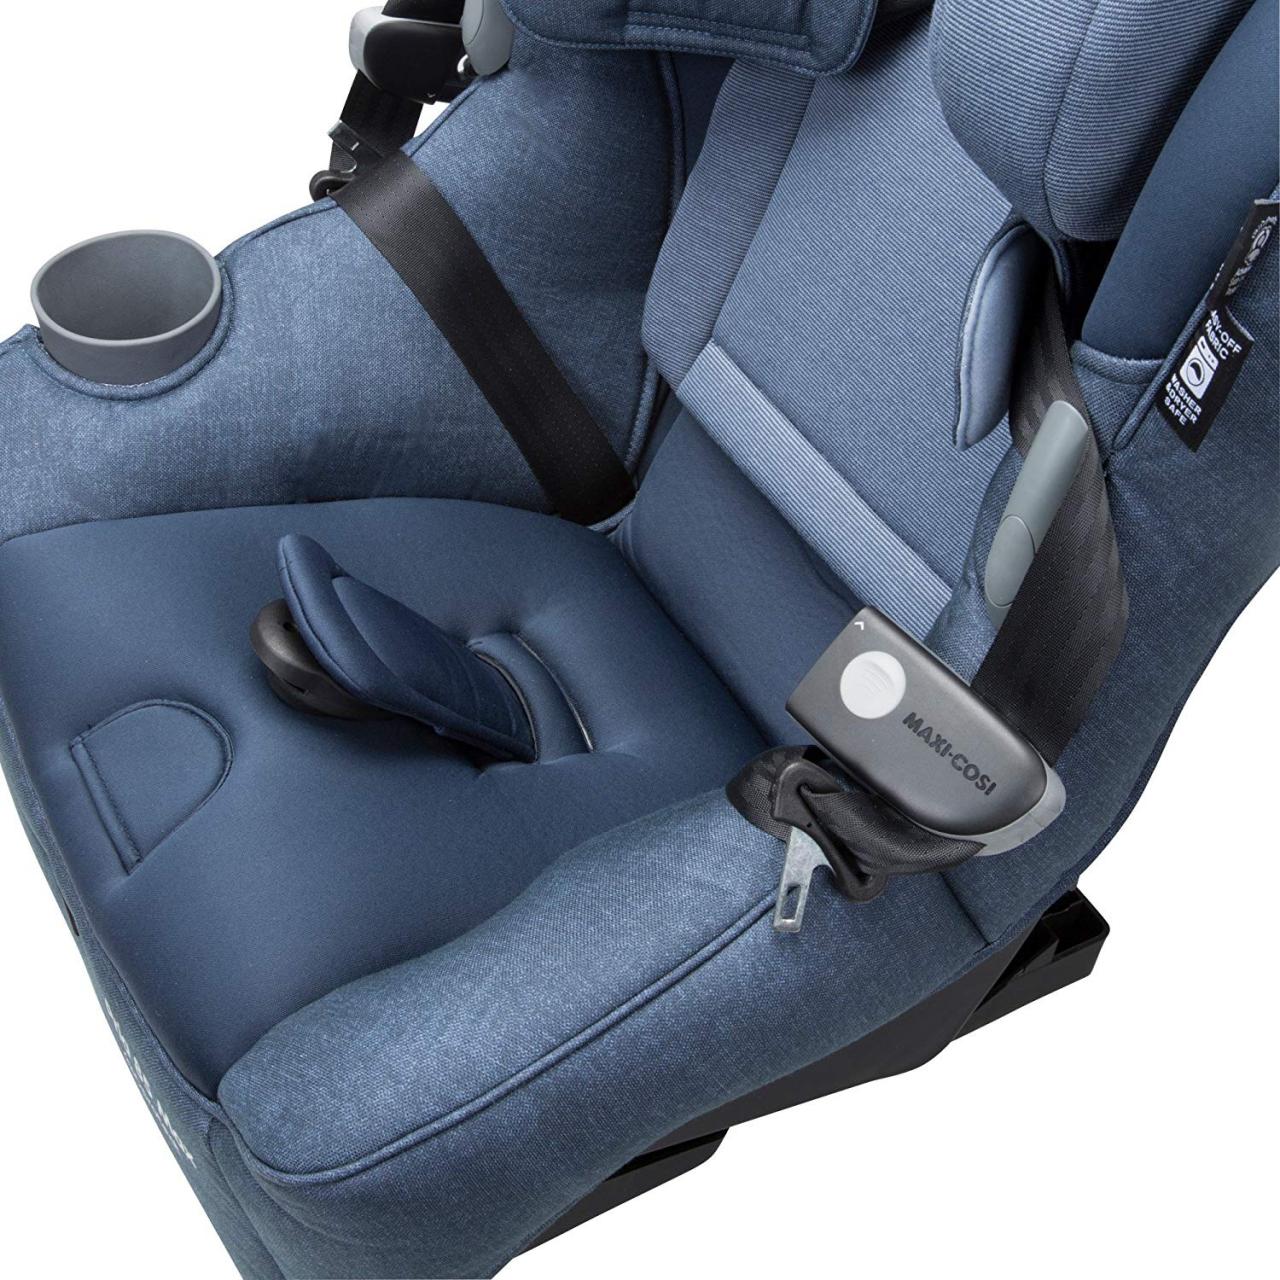 Maxi Cosi Pria 85 Max 汽車座椅(初生-85 lbs) - Twins Baby Company Limited  孖寶嬰兒用品有限公司